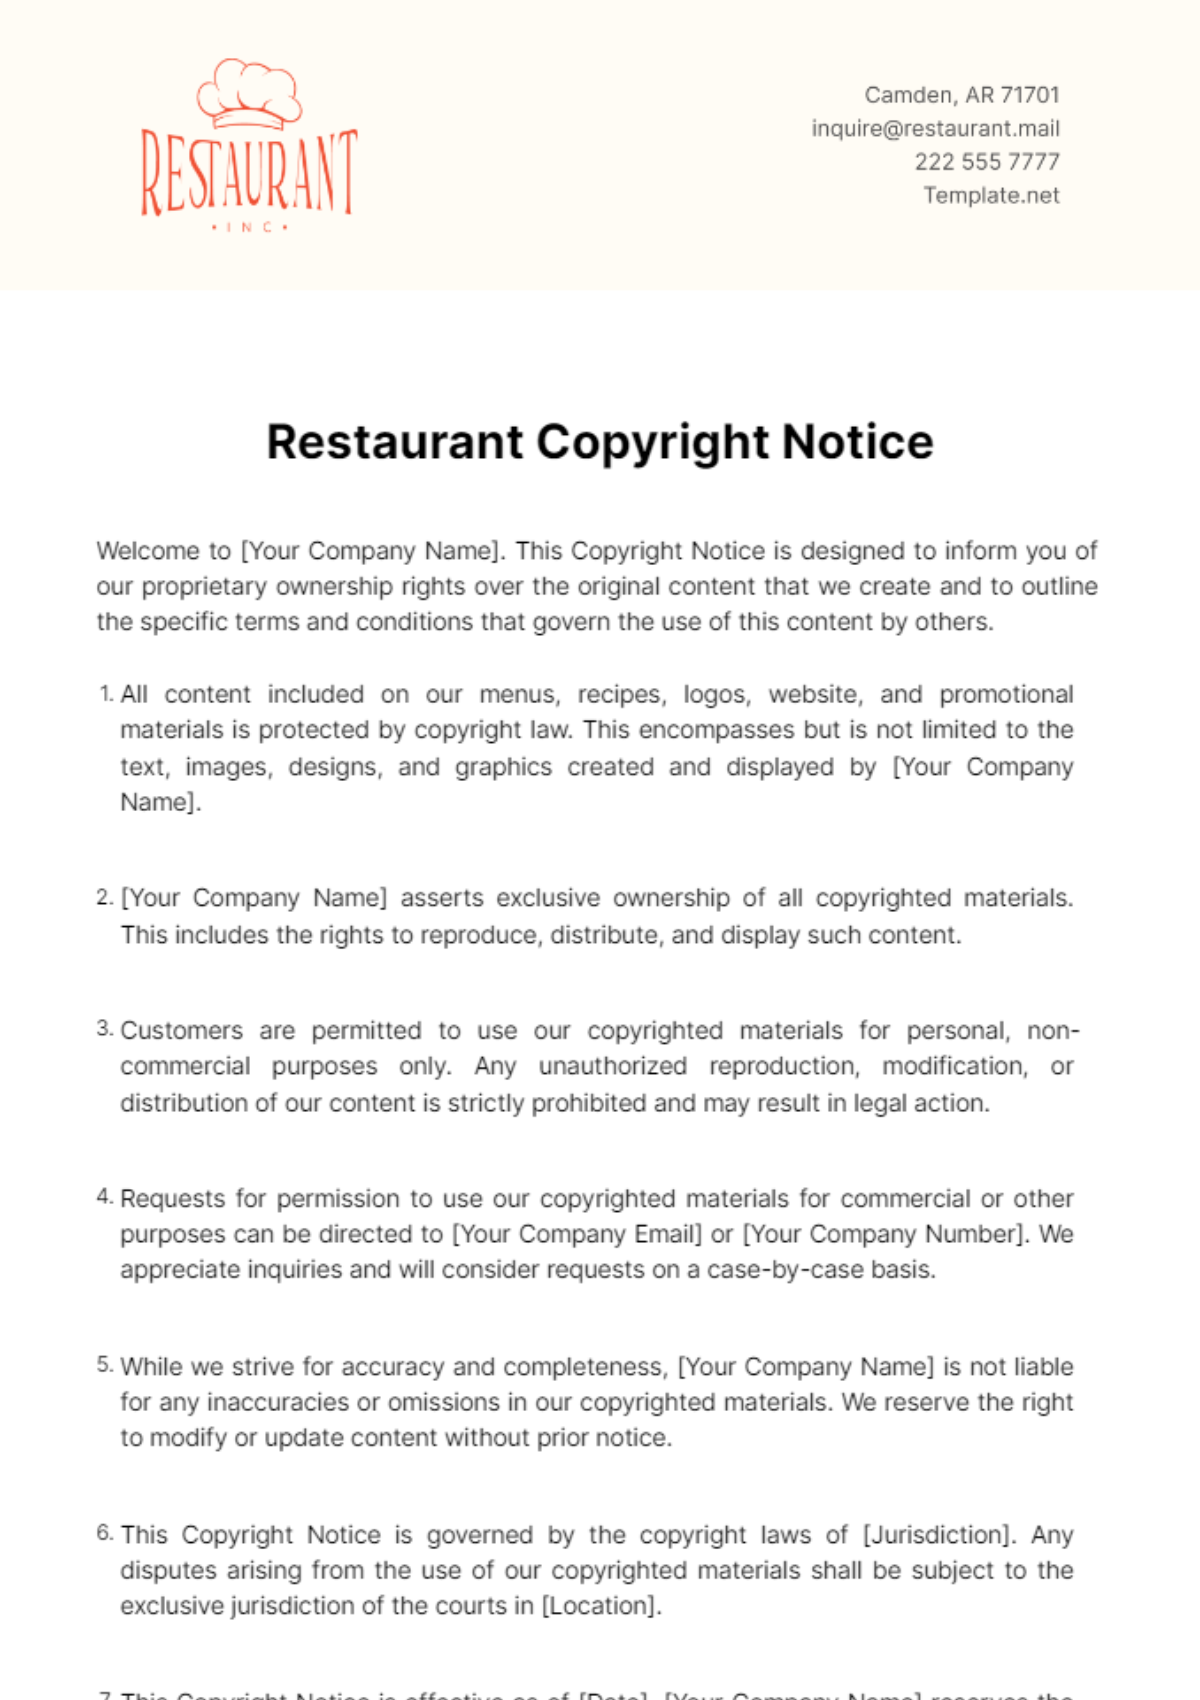 Free Restaurant Copyright Notice Template